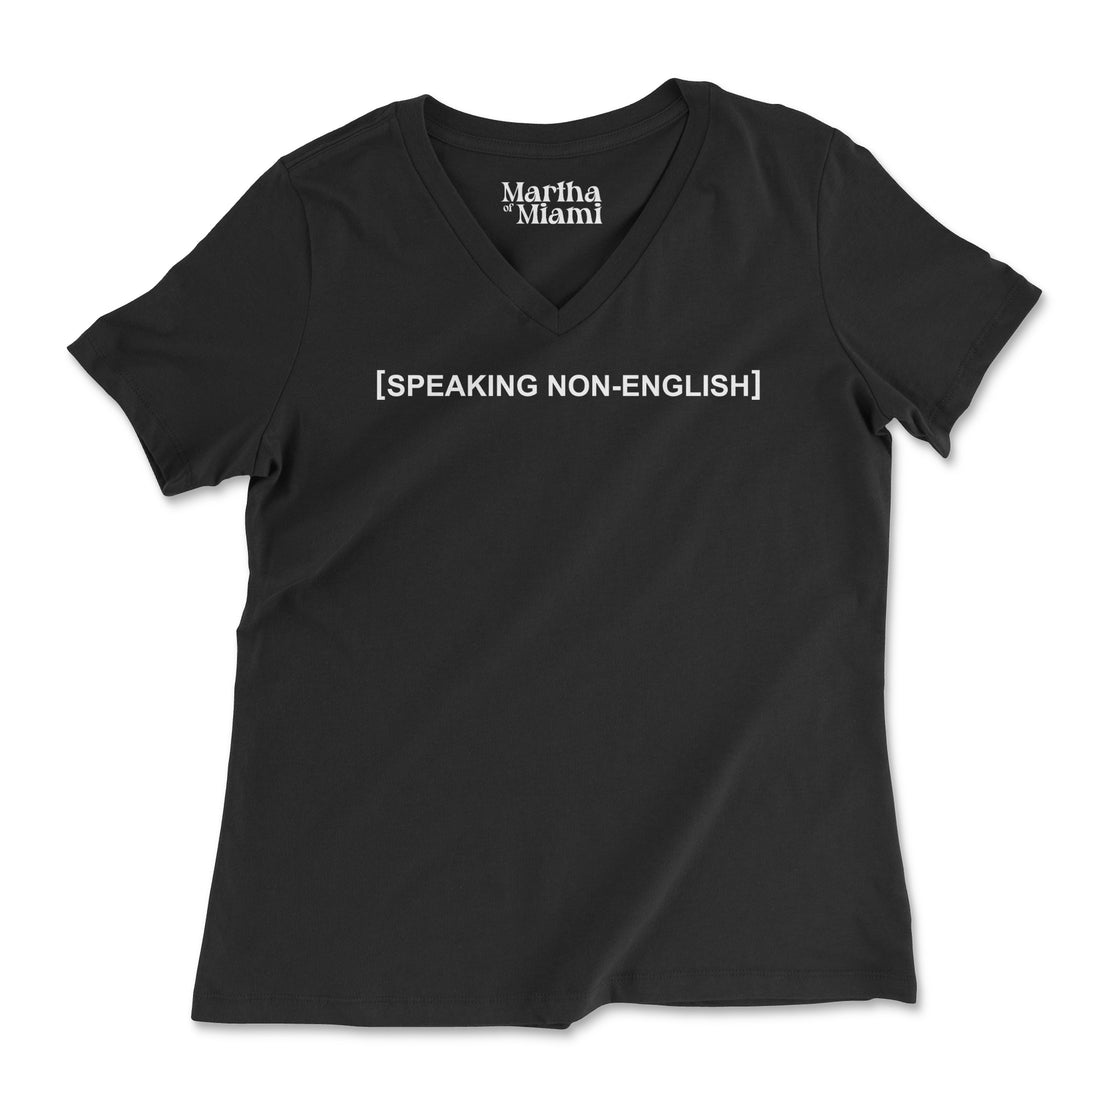 Speaking Non-English V-Neck T-Shirt